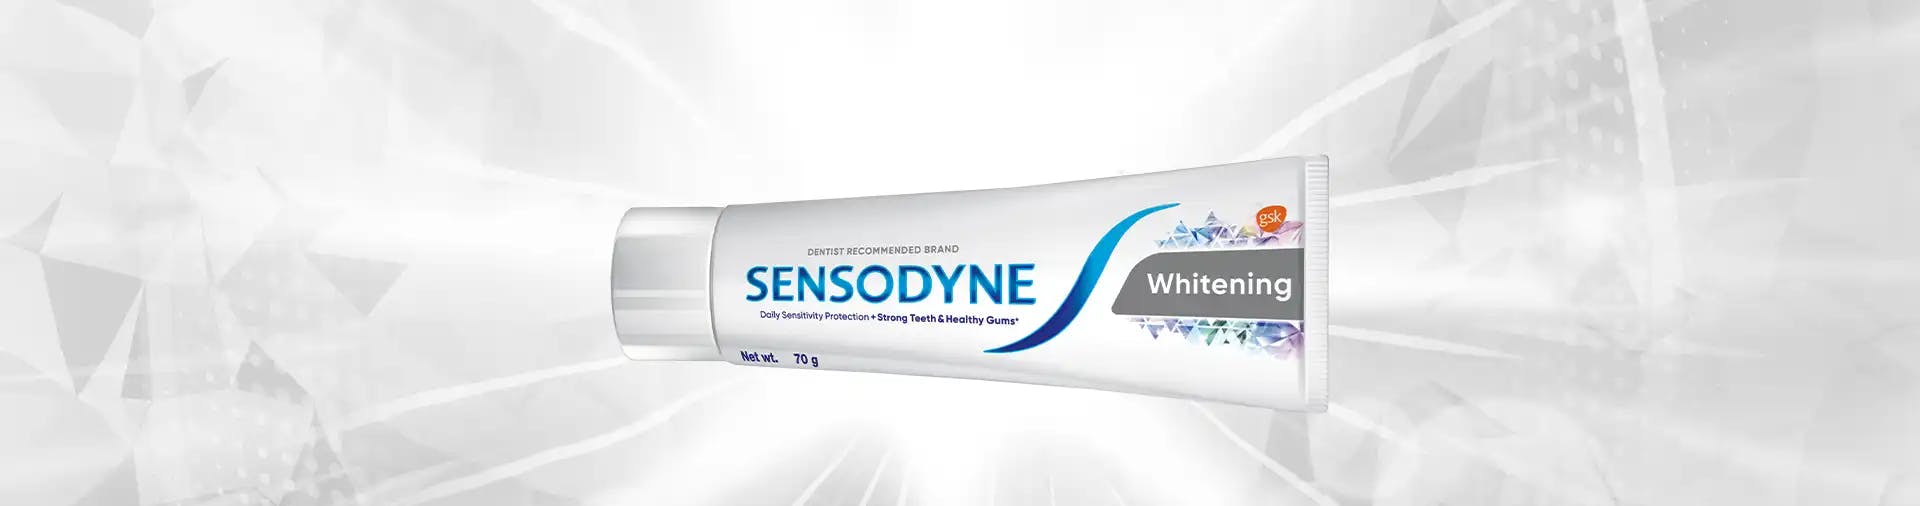 Sensodyne Gentle Whitening campaign banner